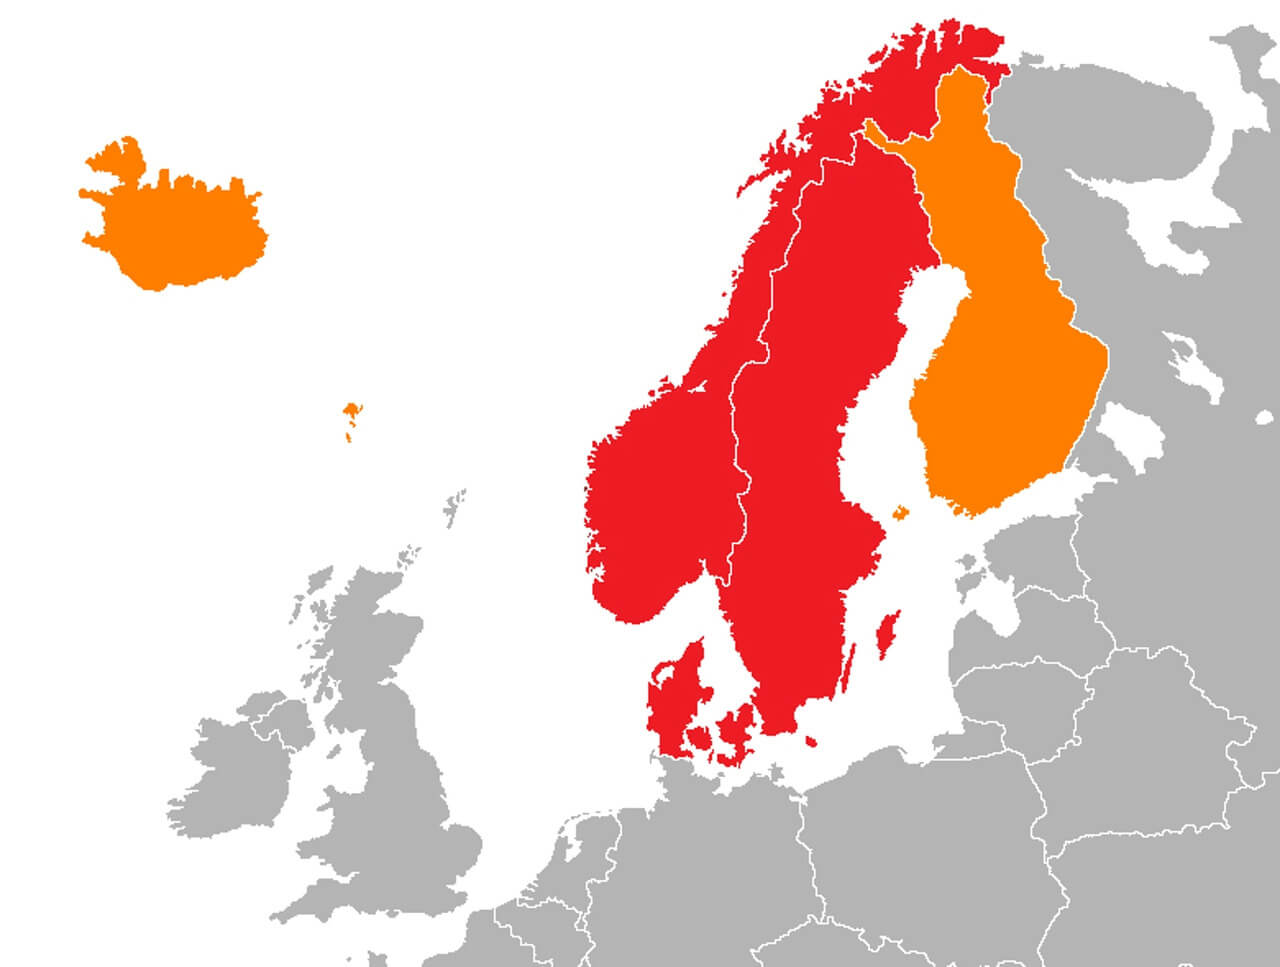 Scandiniavia or Nordic market